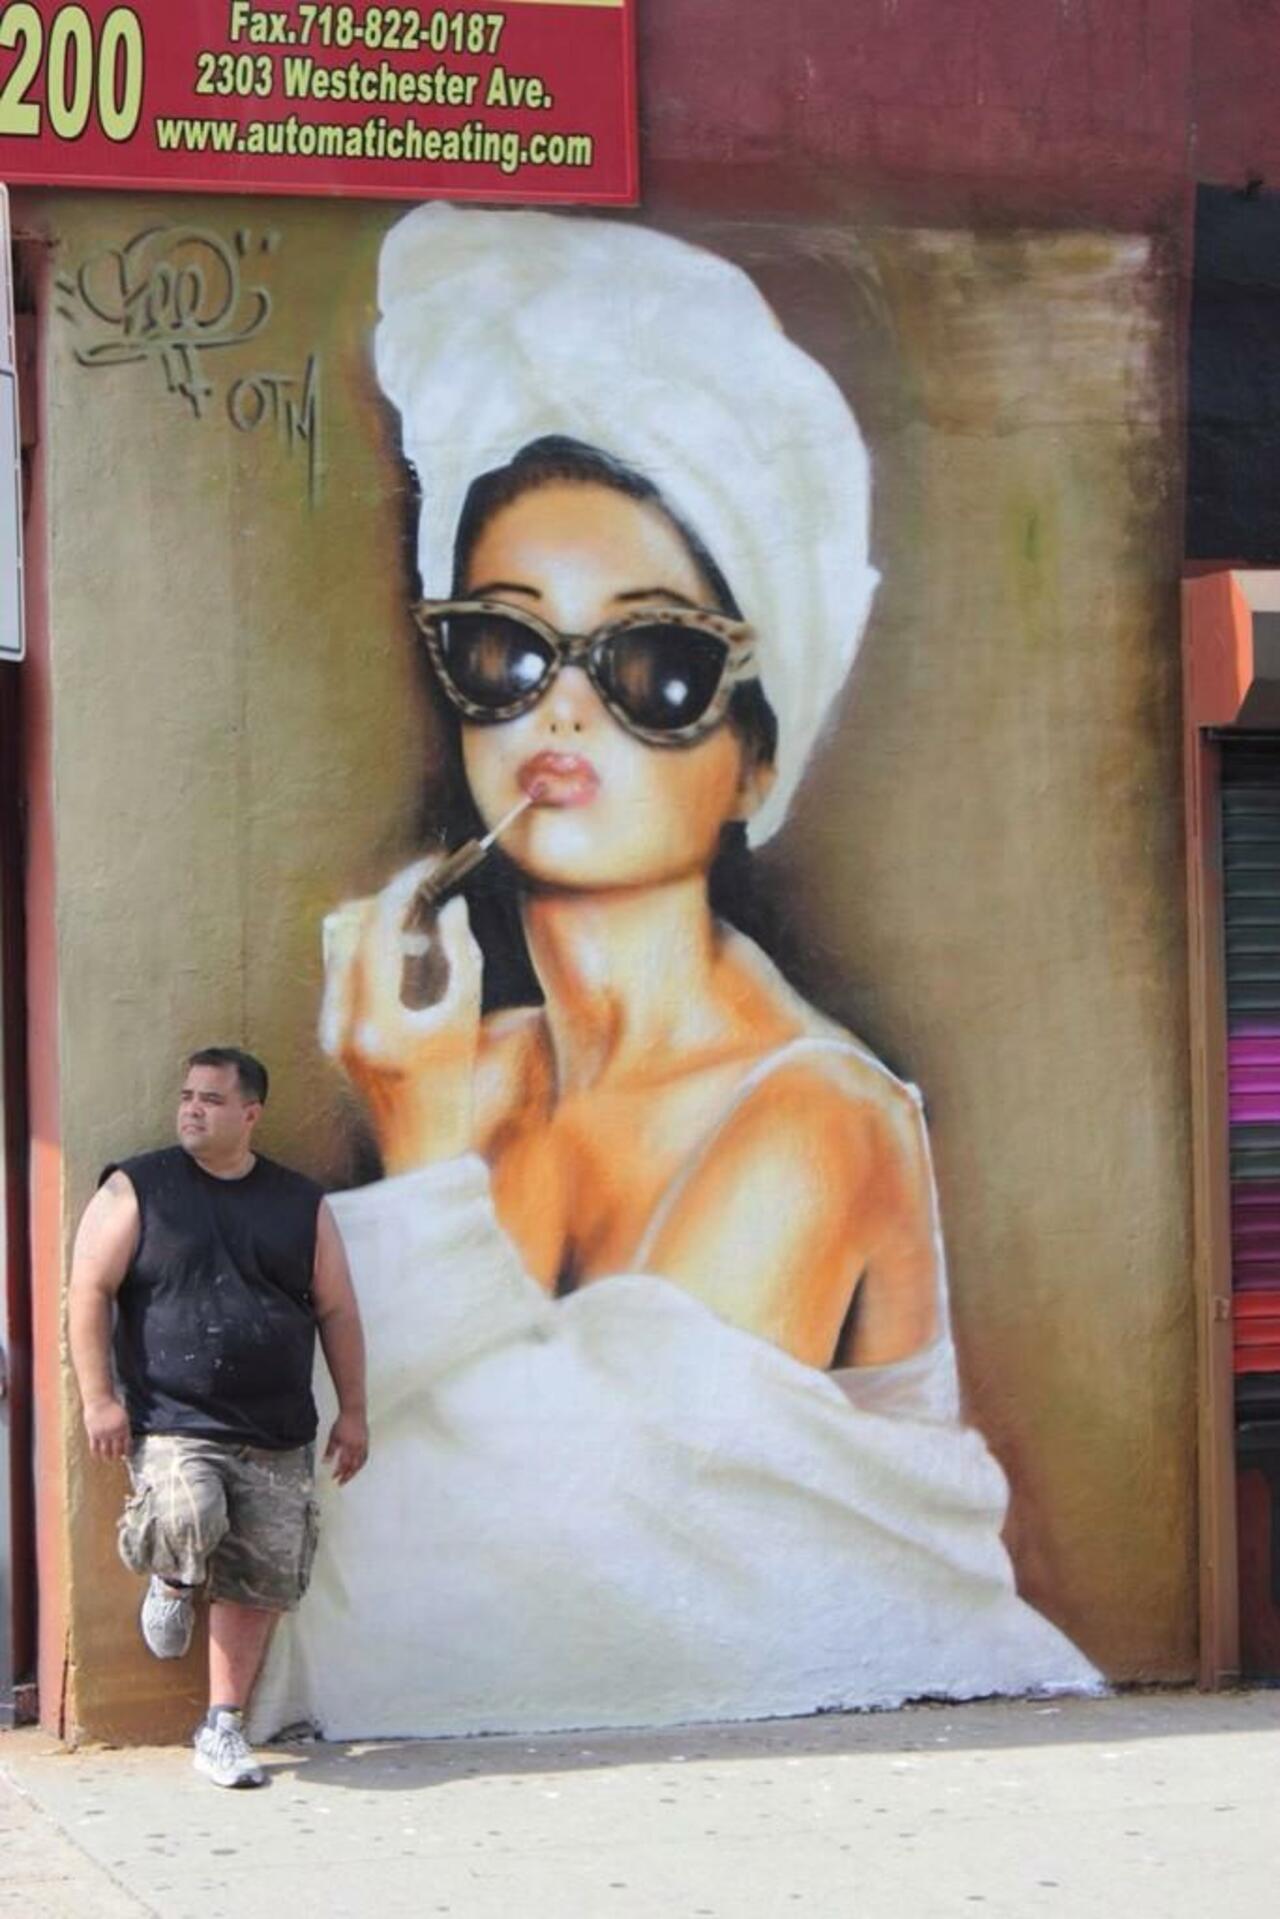 RT @designopinion: Artist 'see_tf' new Street Art portrait located in The Bronx, #NY #art #graffiti #mural #streetart http://t.co/kmGy8bM6Hb